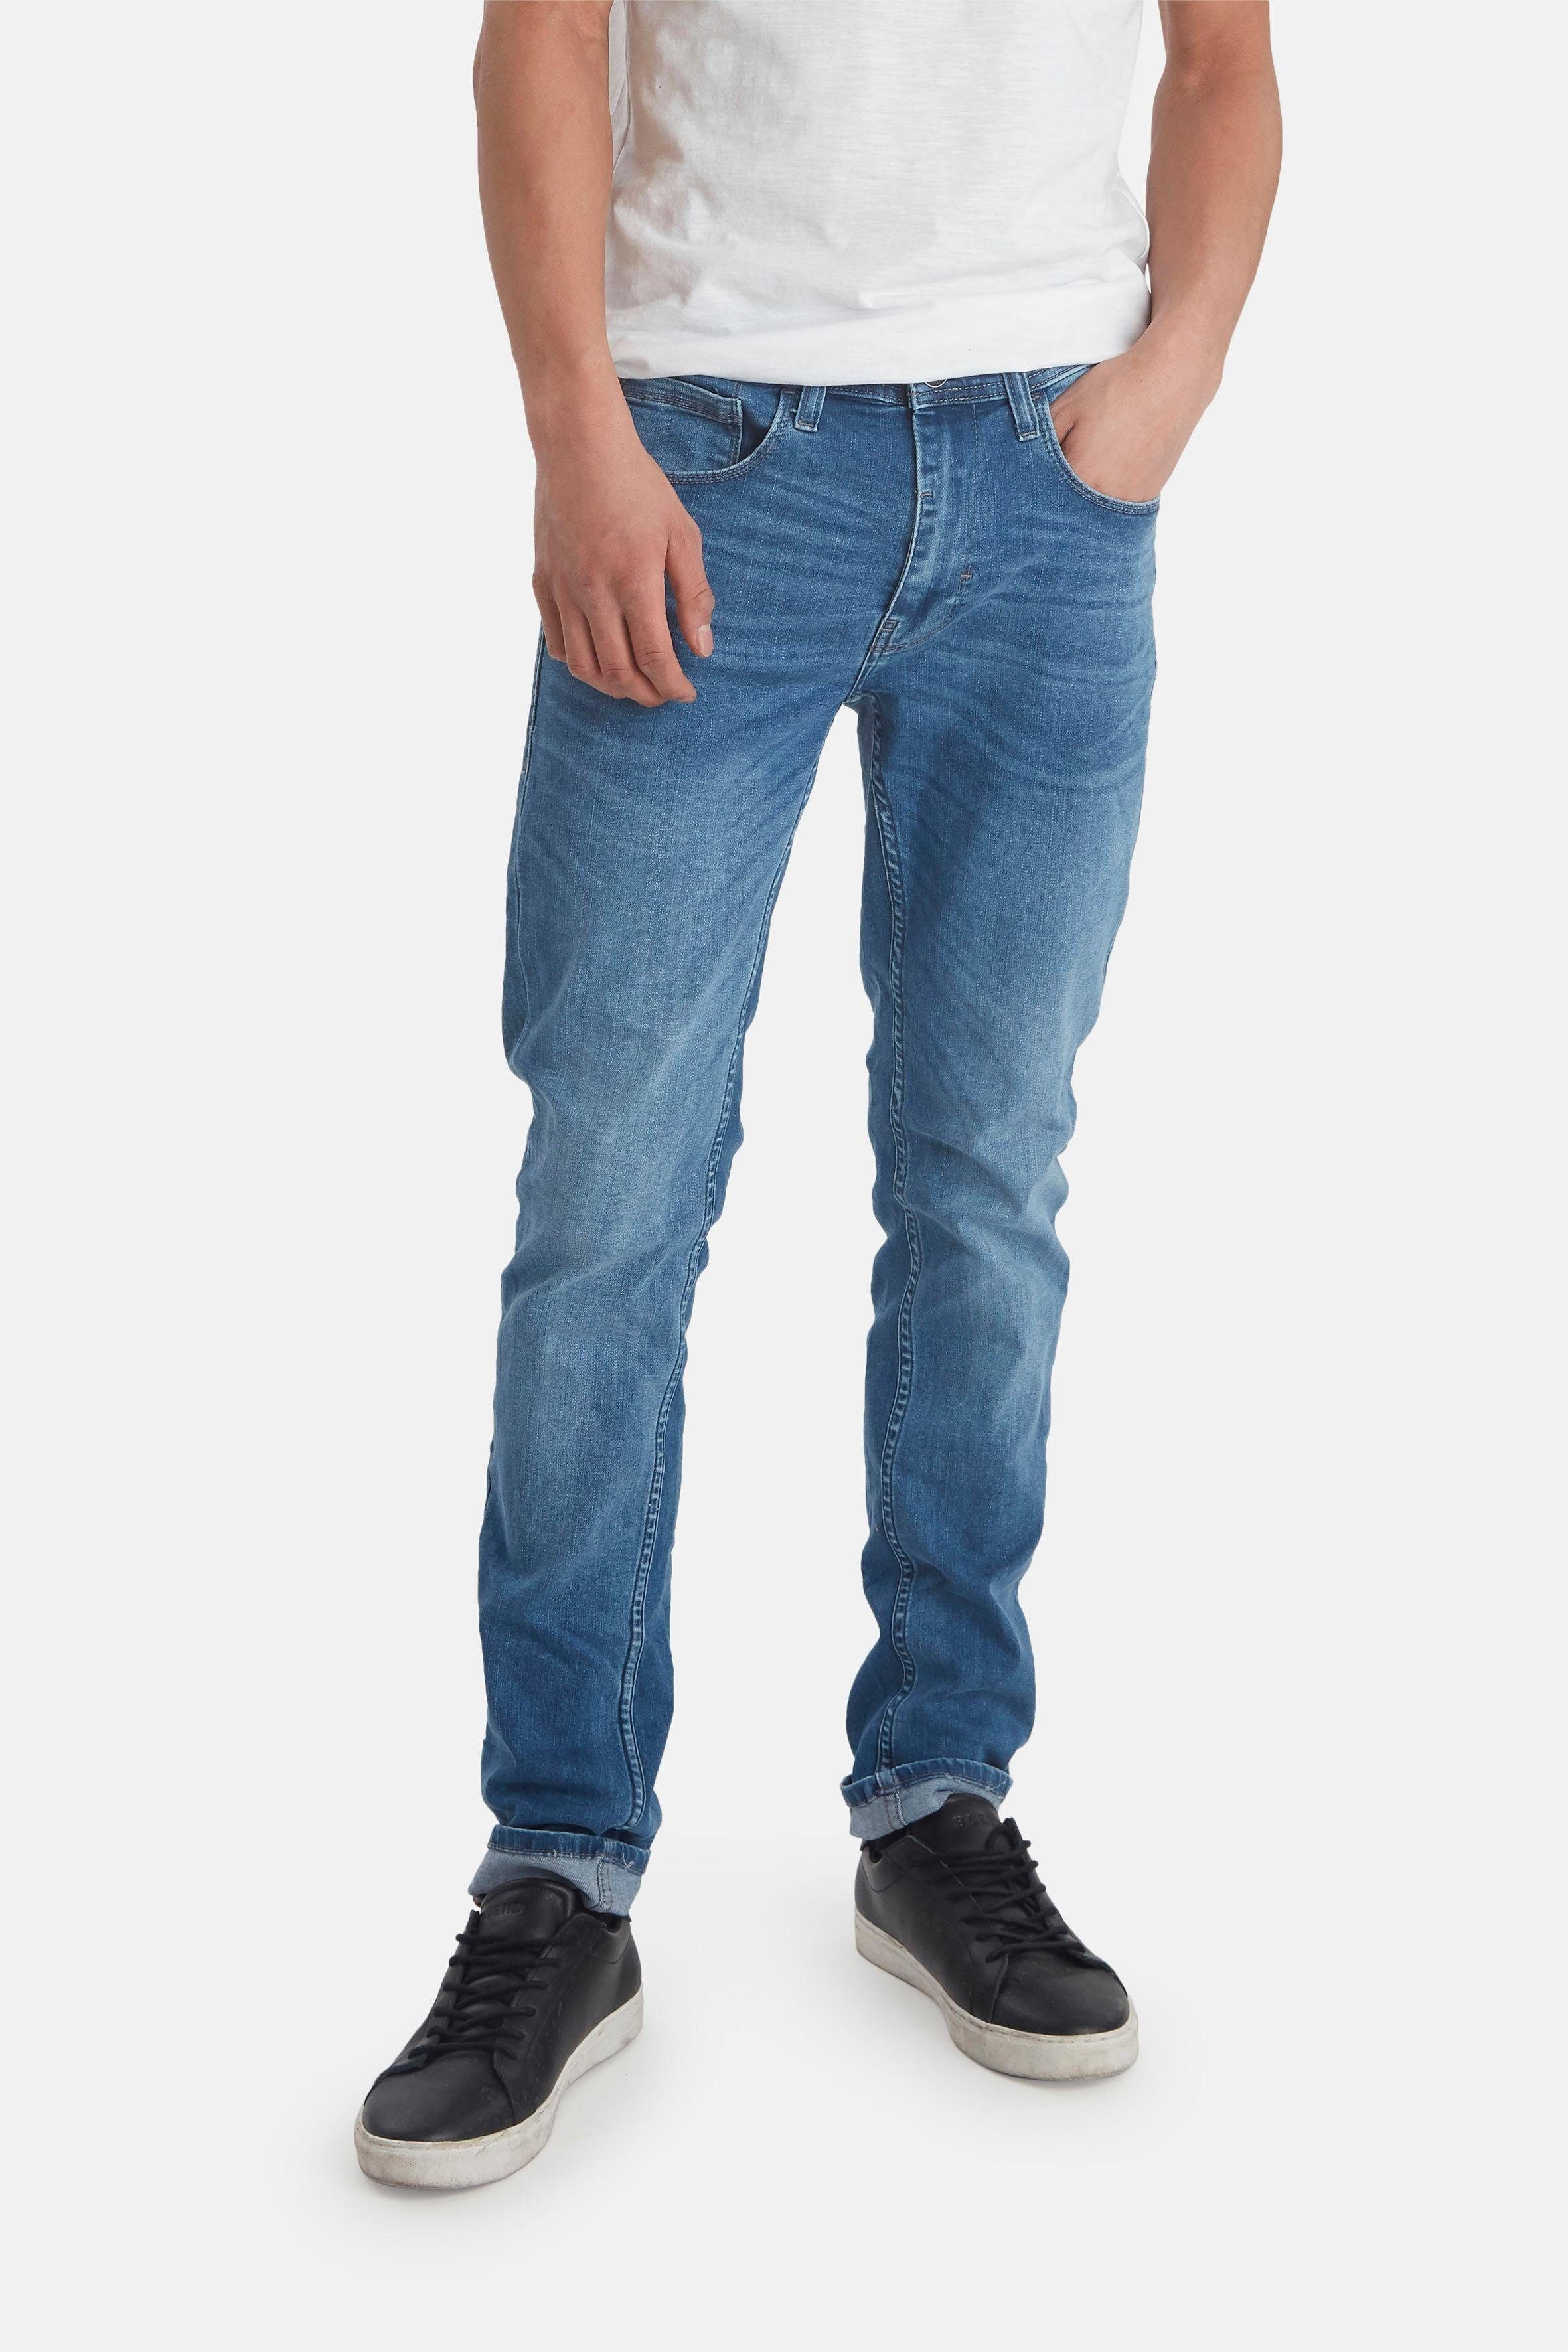 Jet Slim-fit-Jeans Multiflex Blend mid-blue